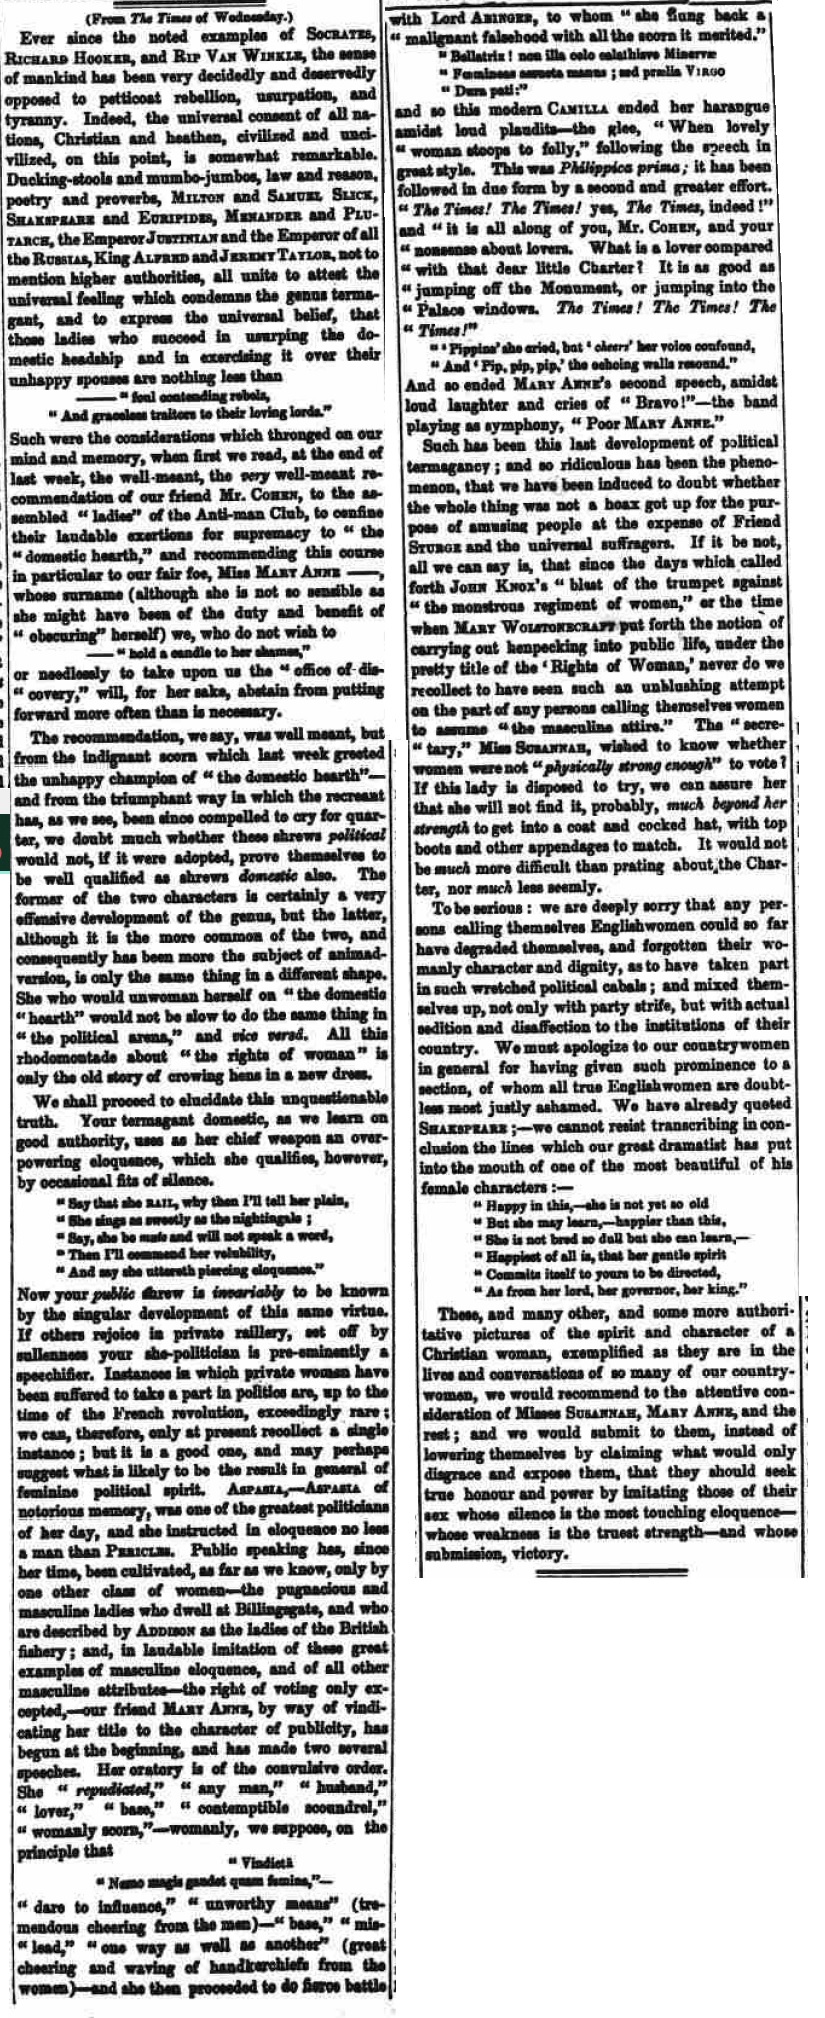 Anti-Man movement - Evening Mail - Wednesday 26 October 1842